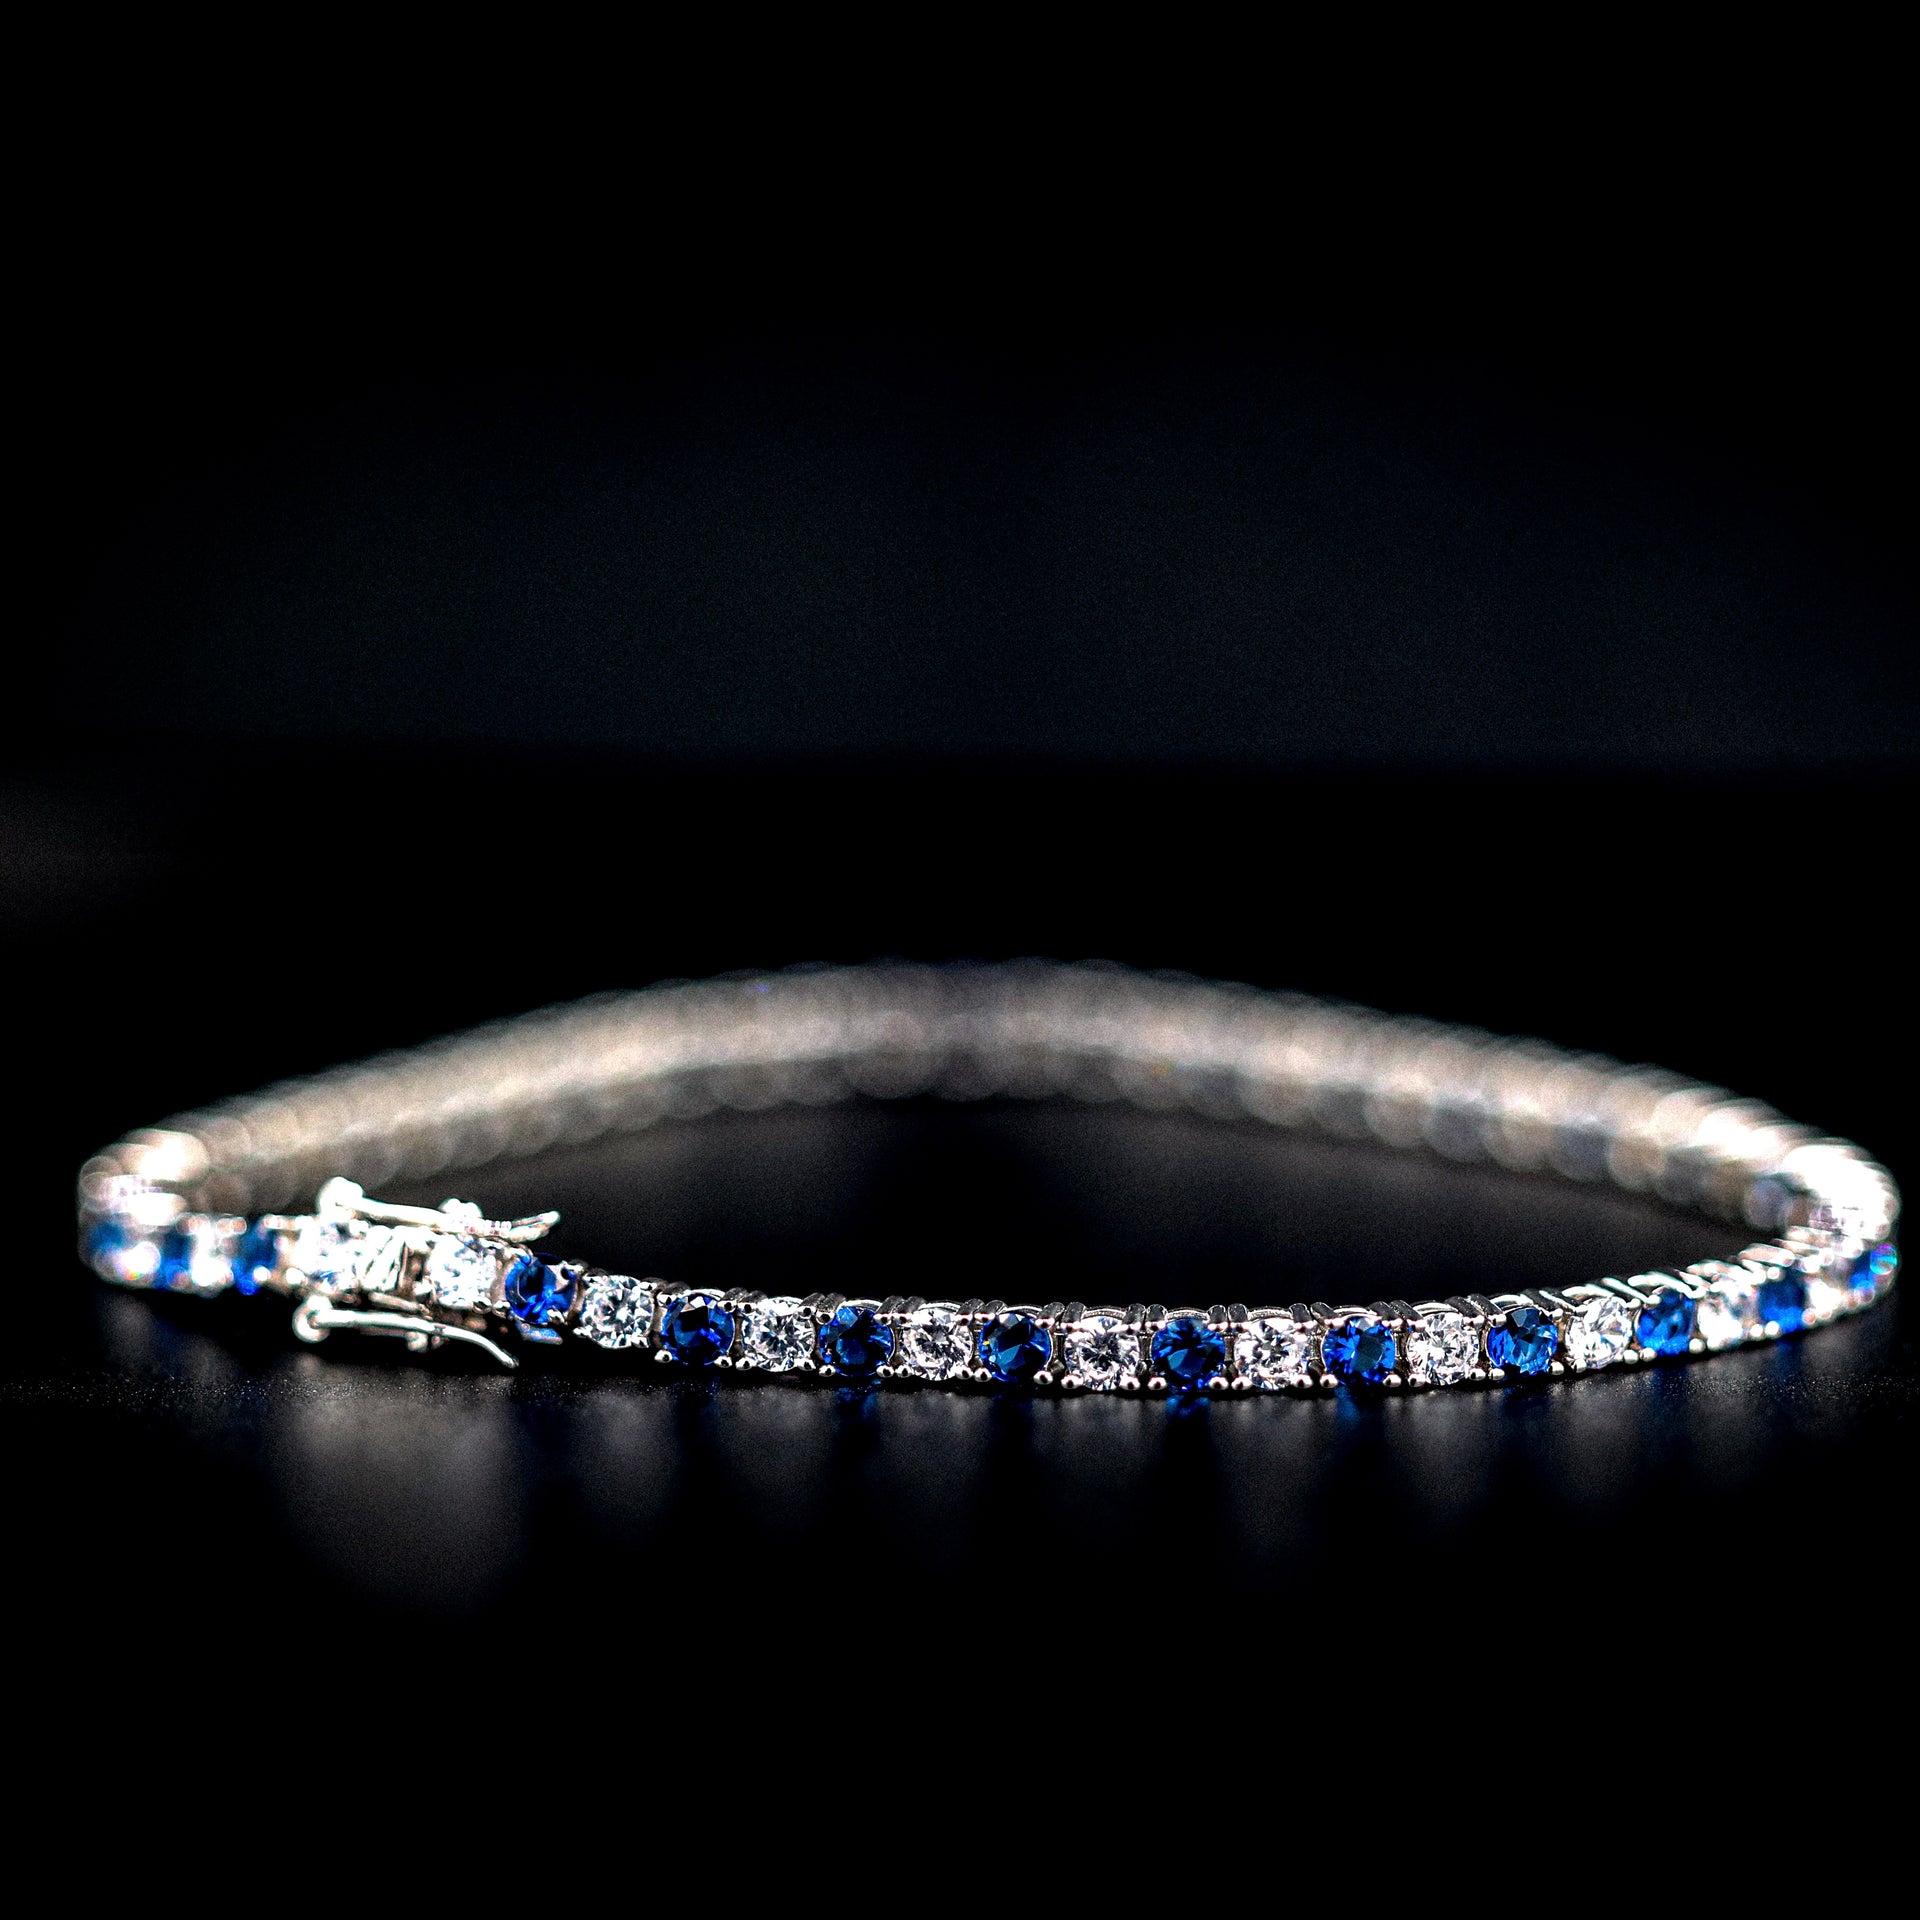 3mm royal blues evert bracelet